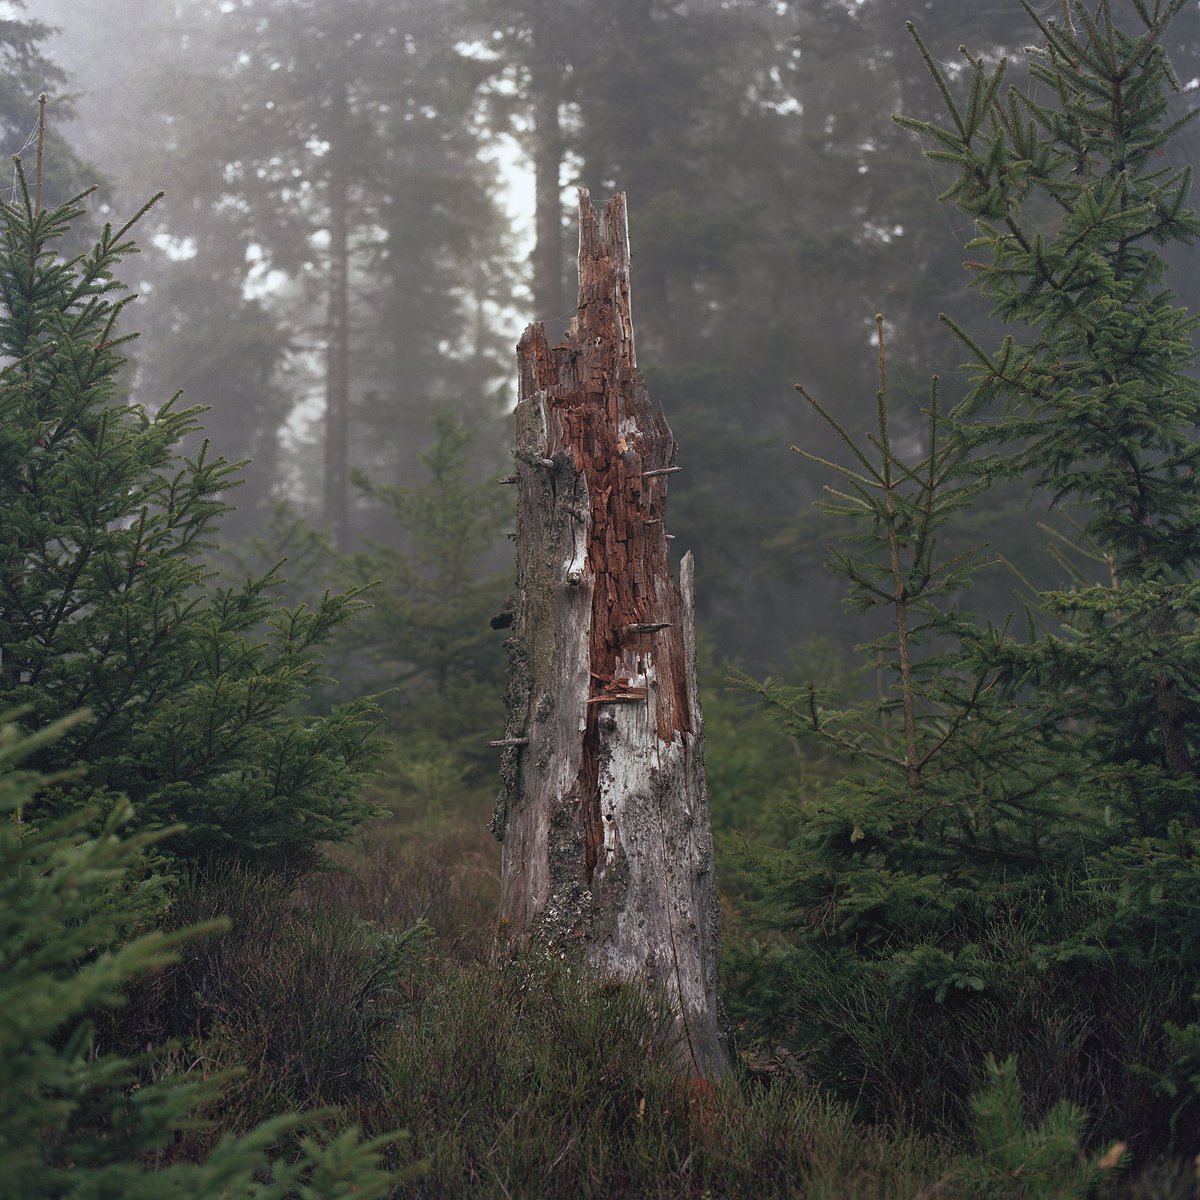 361
#tree #deadtree #trunk #forest #wood #nature #fog #mist #analogphotography #filmphotography #hasselblad #zeiss #kodak #ektachrome #vosges #schwarzwald #mountain